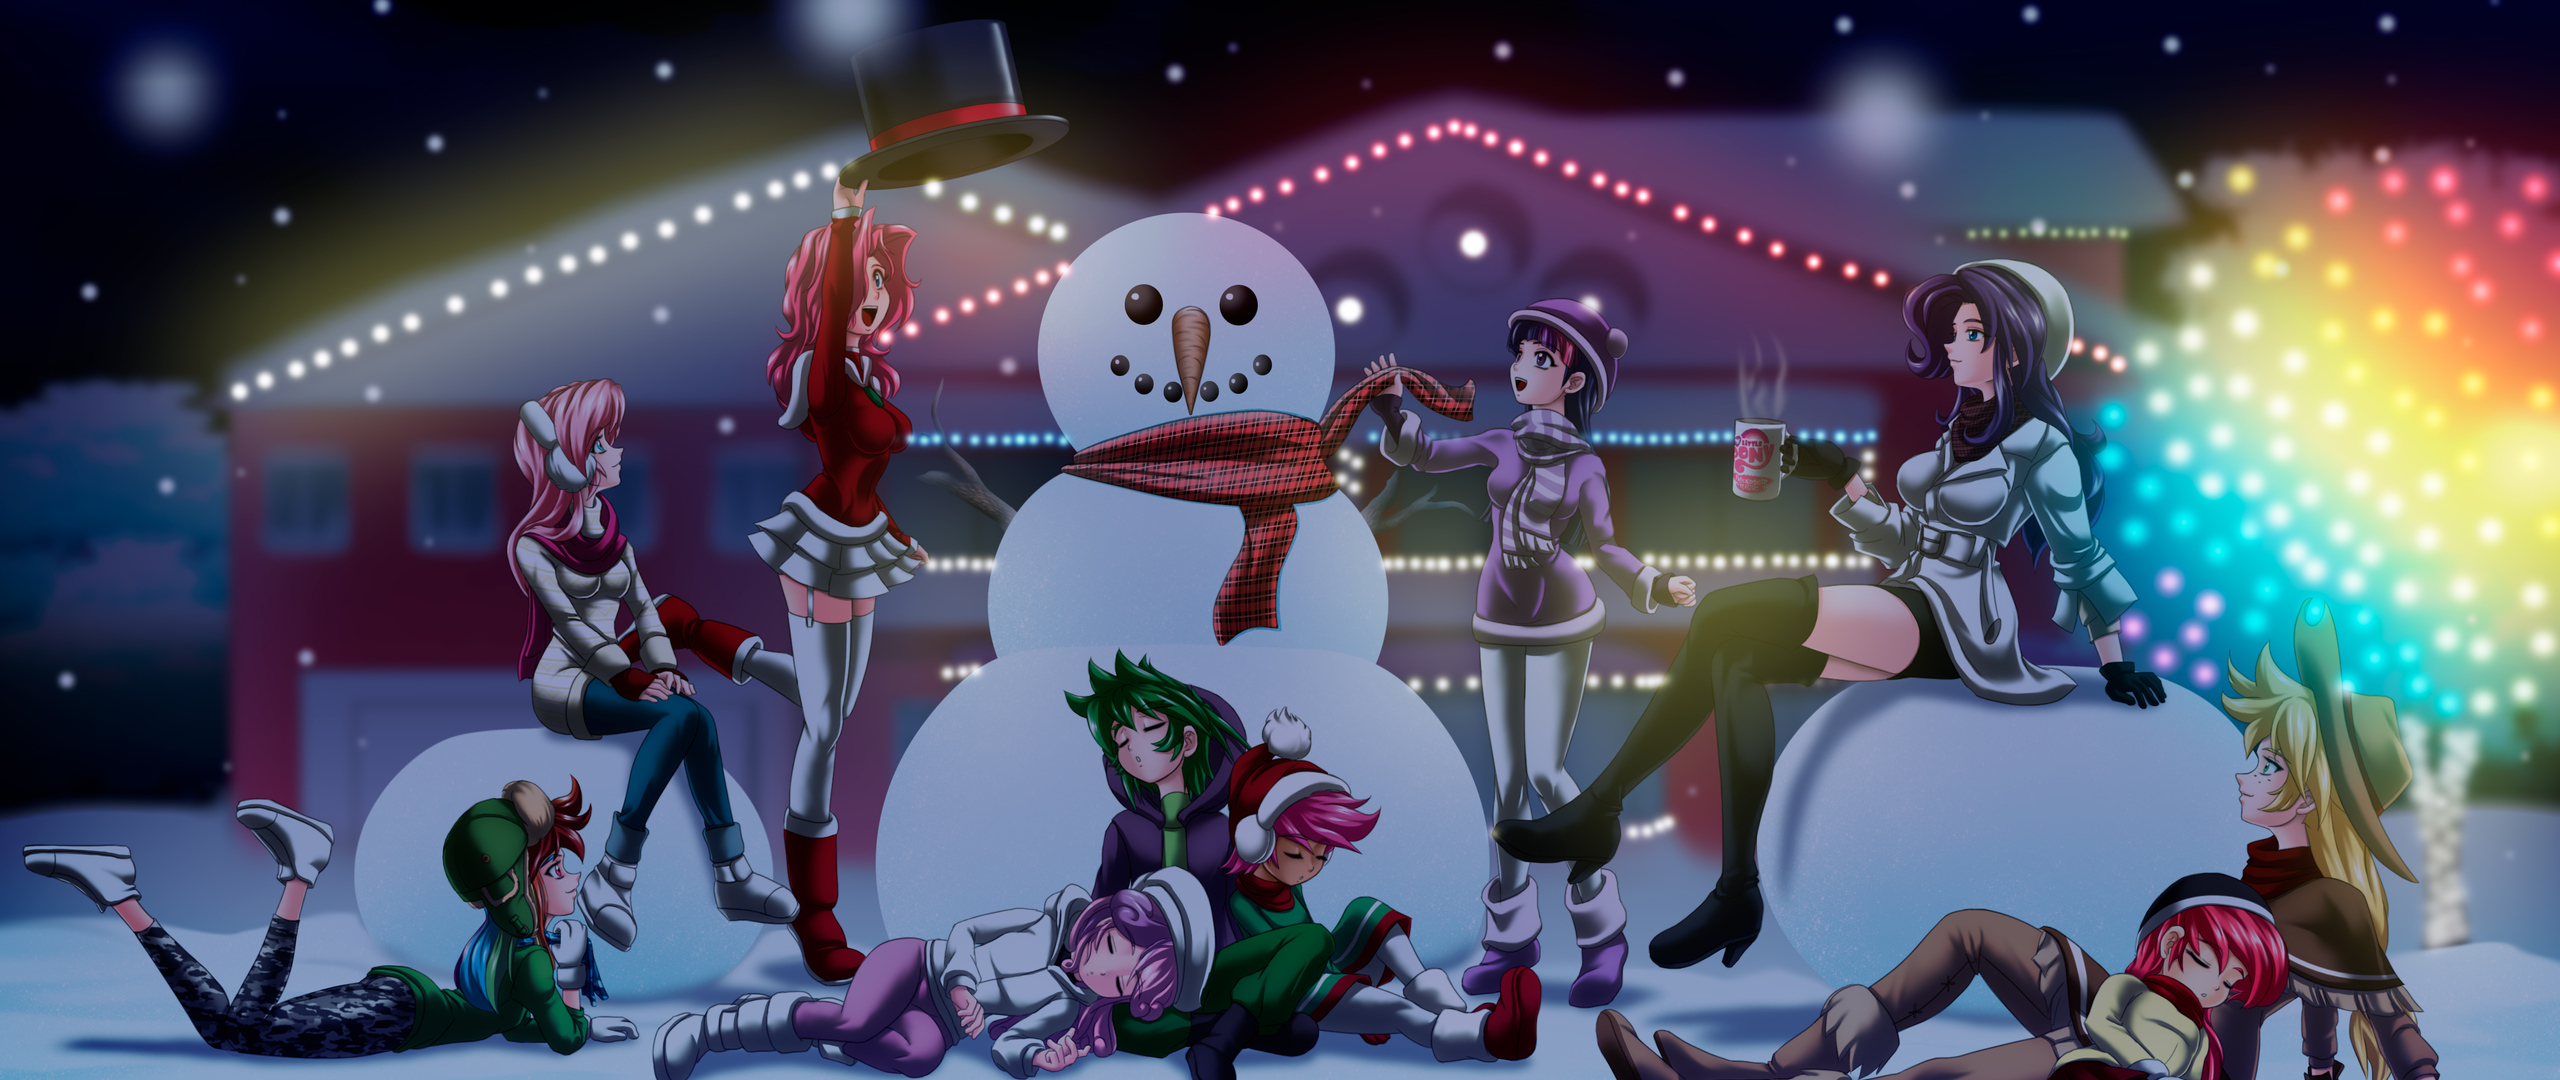 2560x1080 Anime Girls Celebrating Christmas 4k 2560x1080